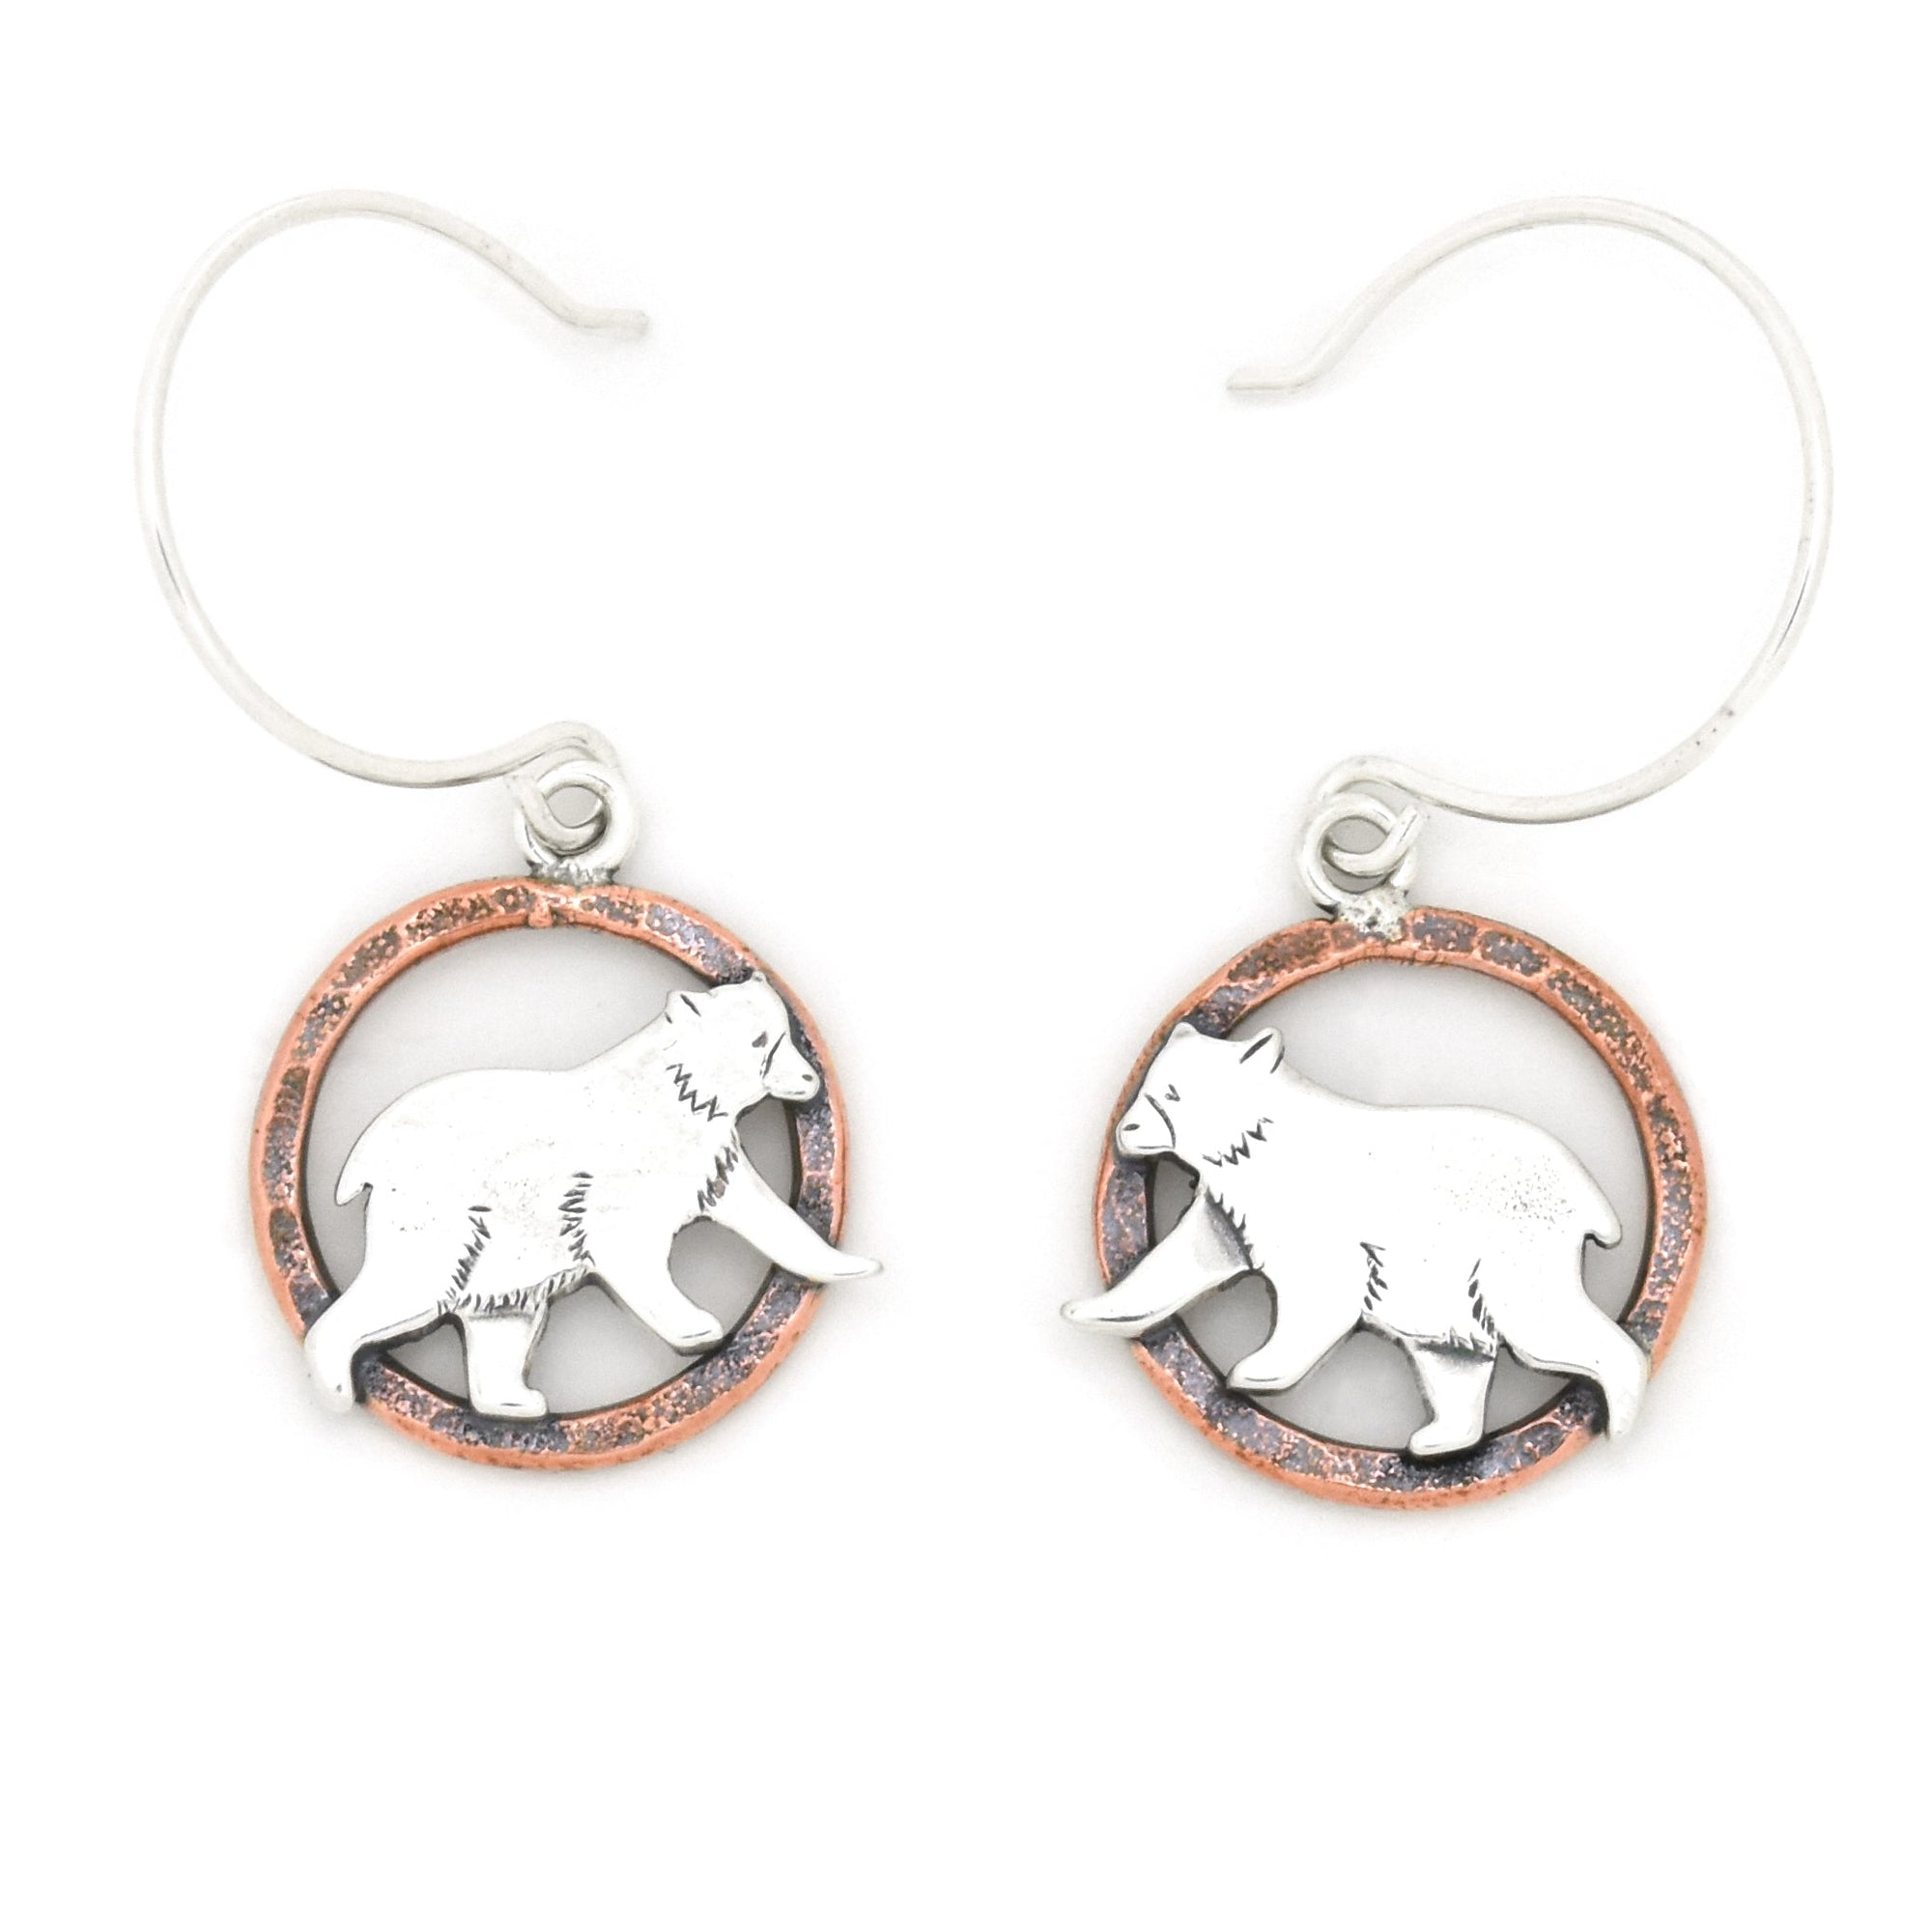 Autumn Bear Earrings - Mixed Metal Earrings   6606 - handmade by Beth Millner Jewelry